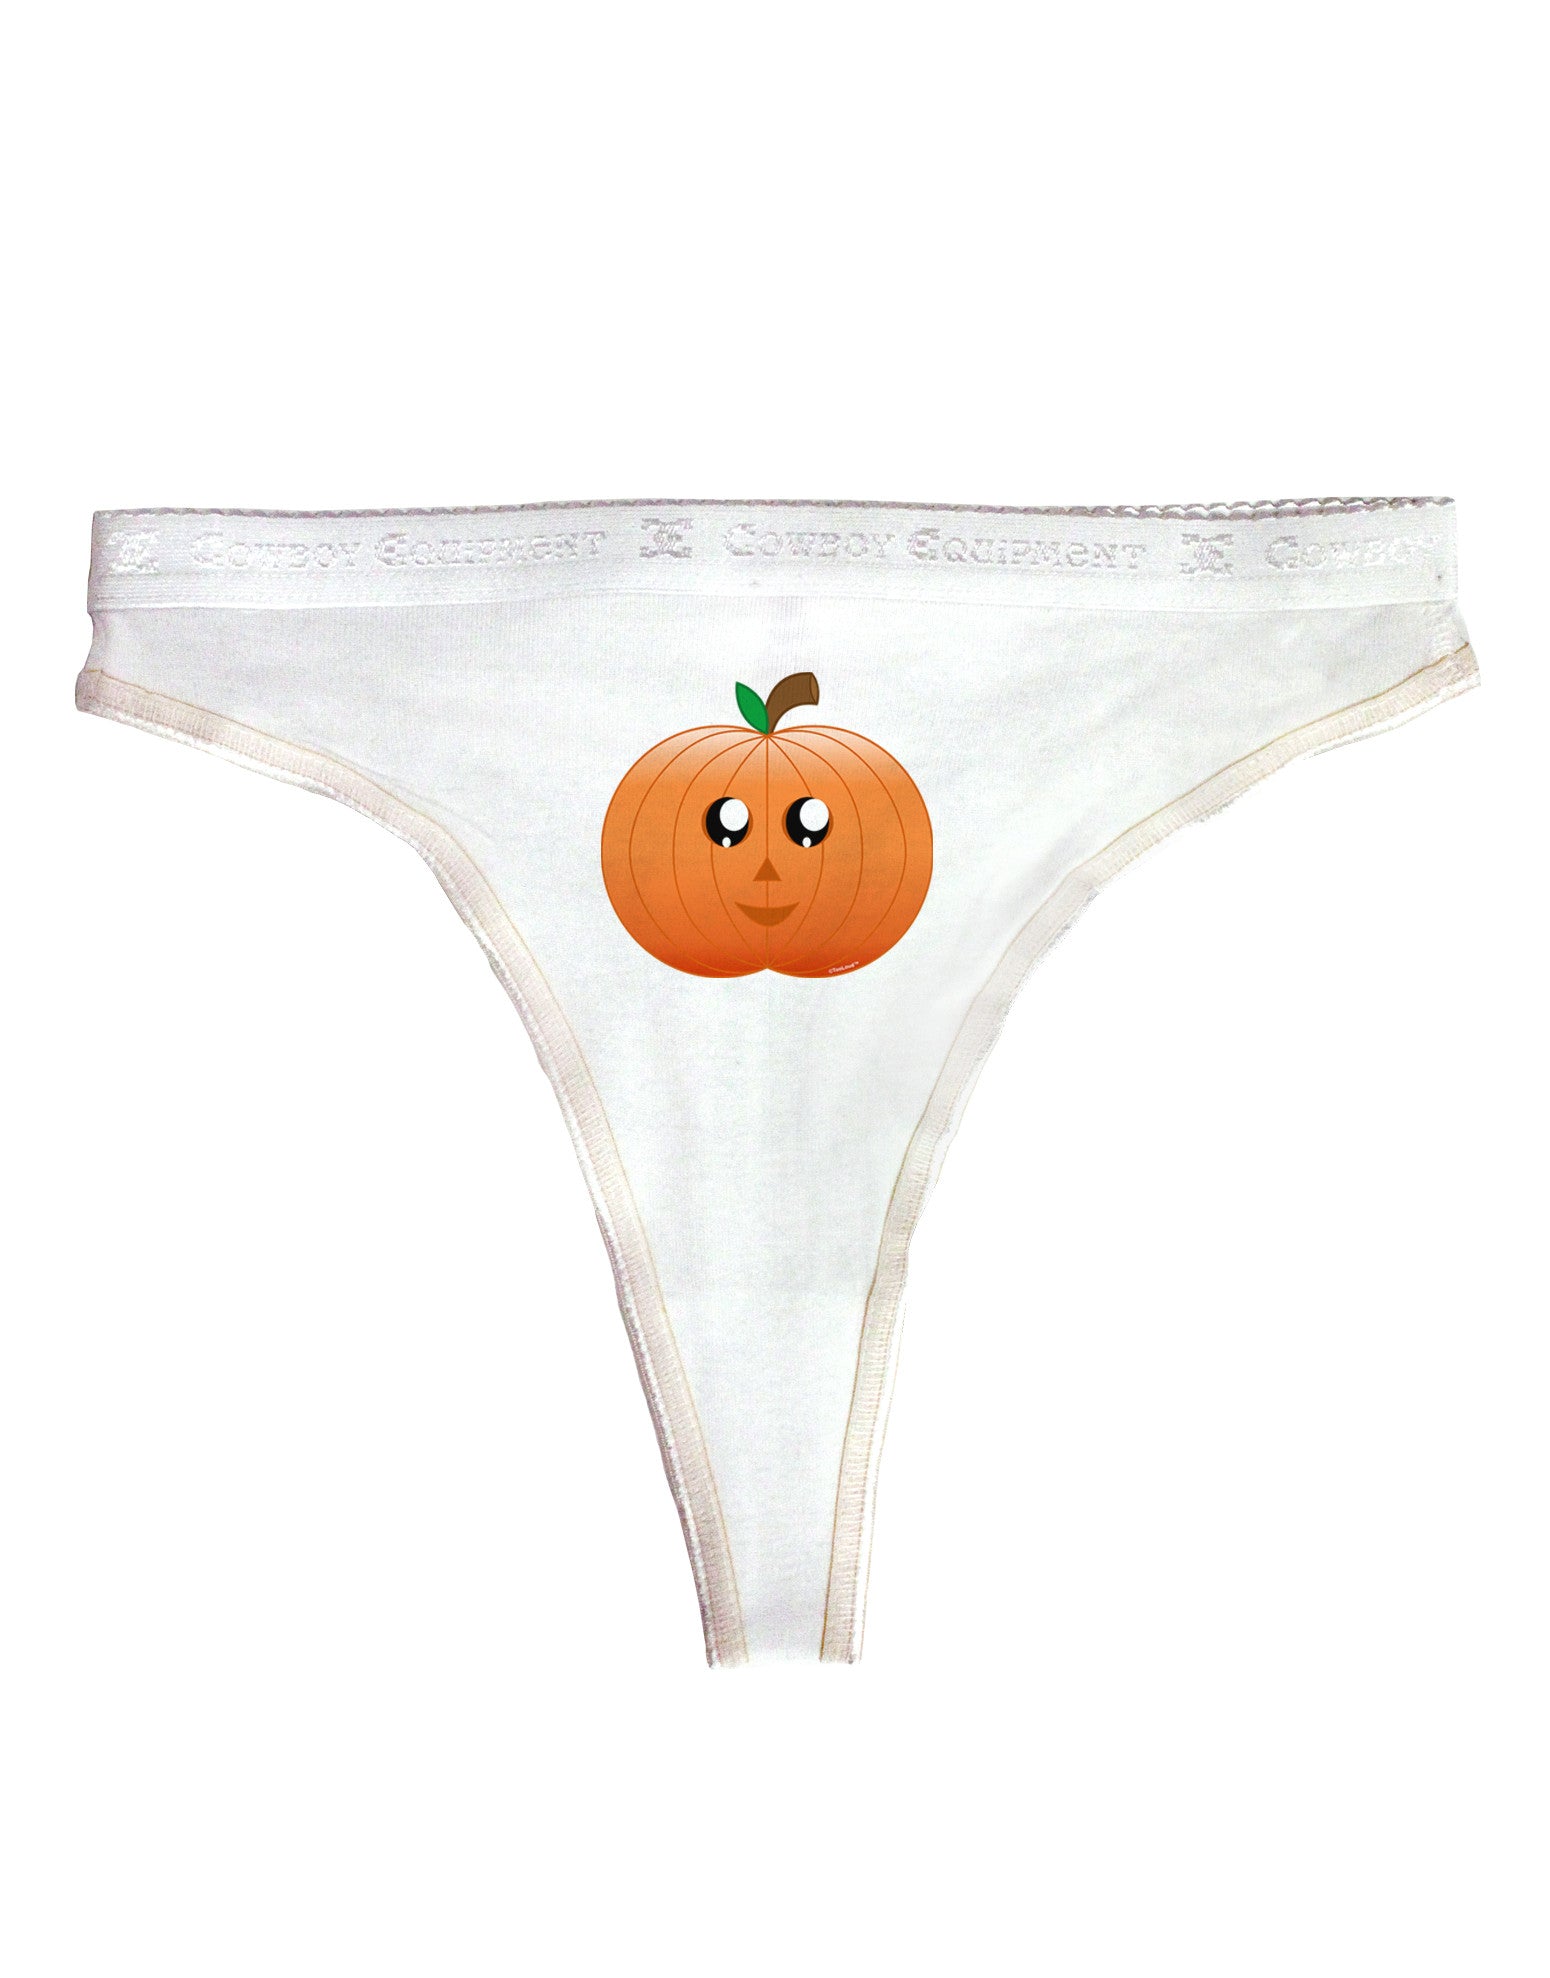 Sale: Promotions on women's panties